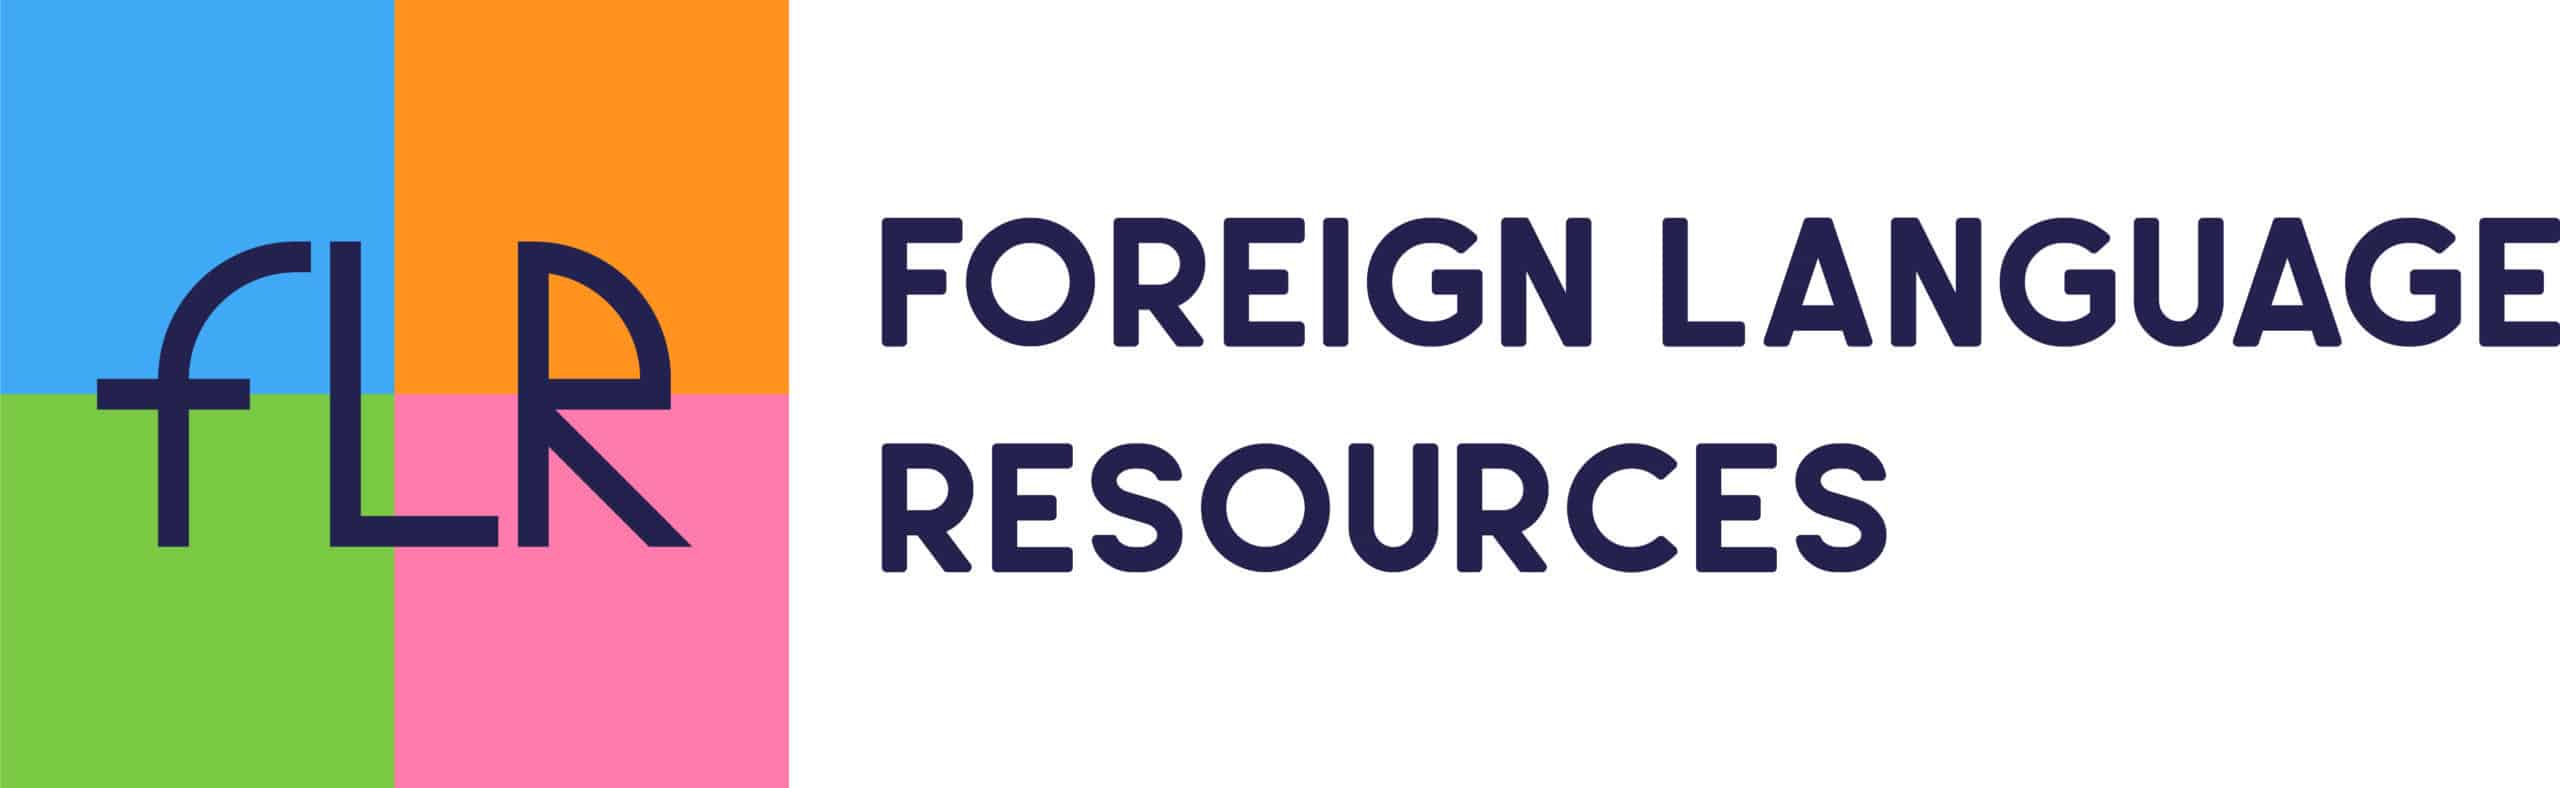 Foreign language resources logo